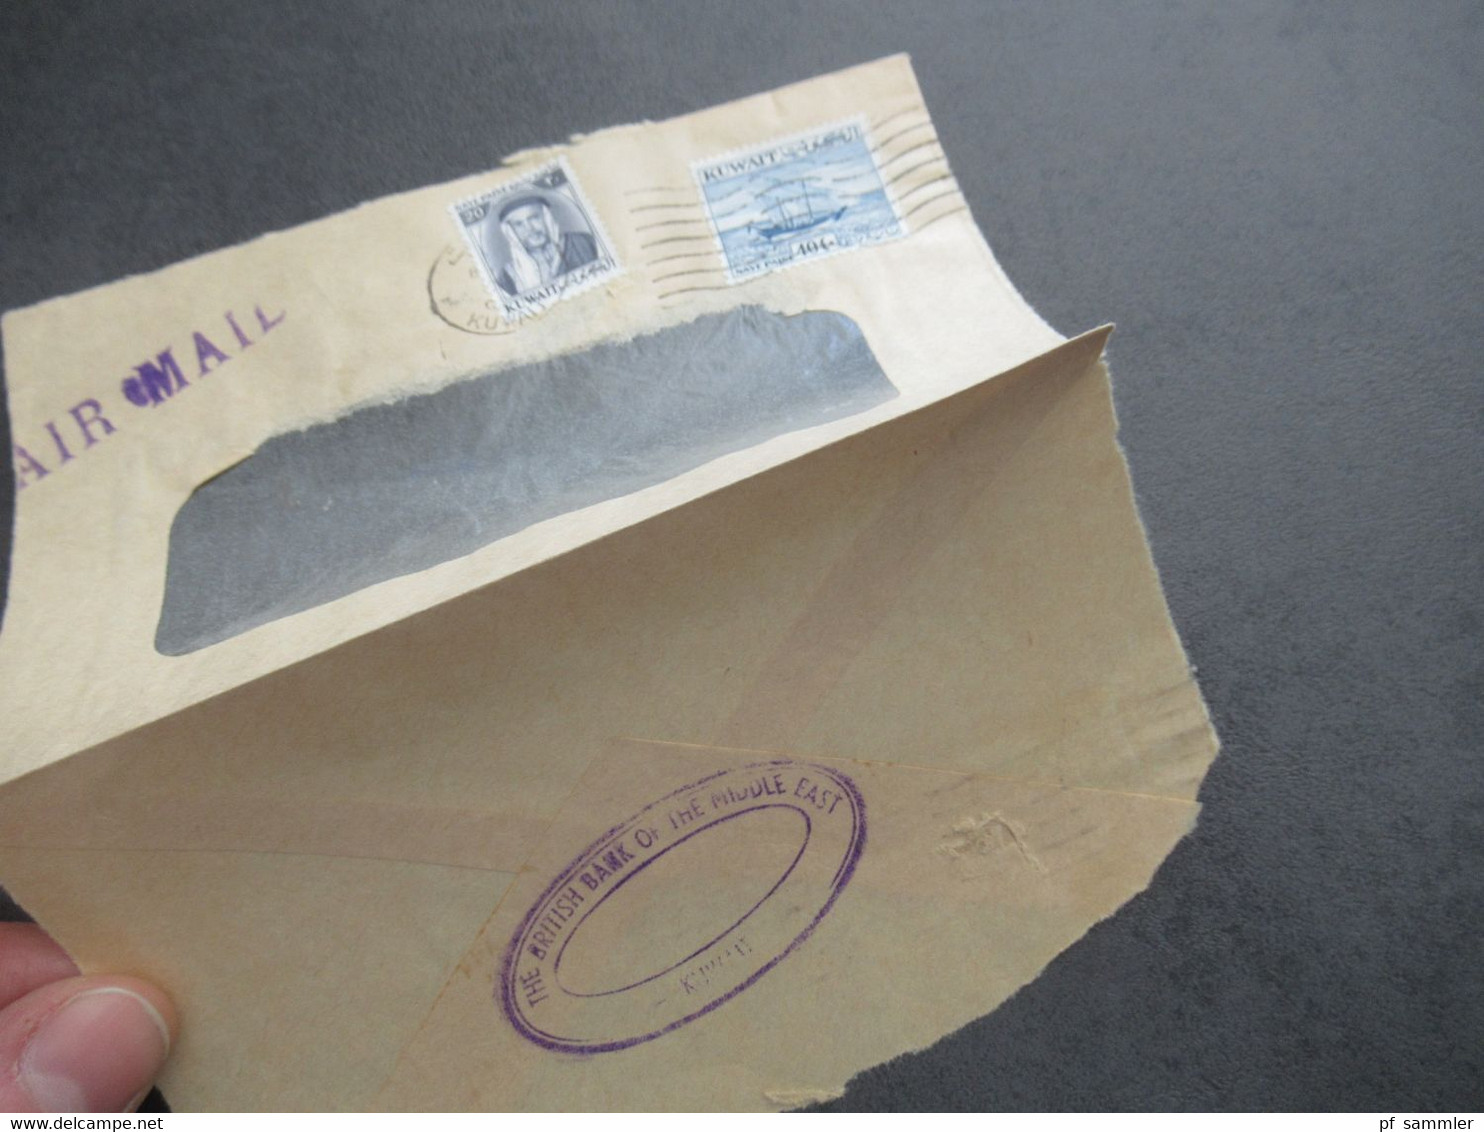 Kuwait 1950er Jahre ?! Air Mail / Luftpost Beleg Umschlag Stempel The British Bank Of The Middle East Kuwait - Koweït